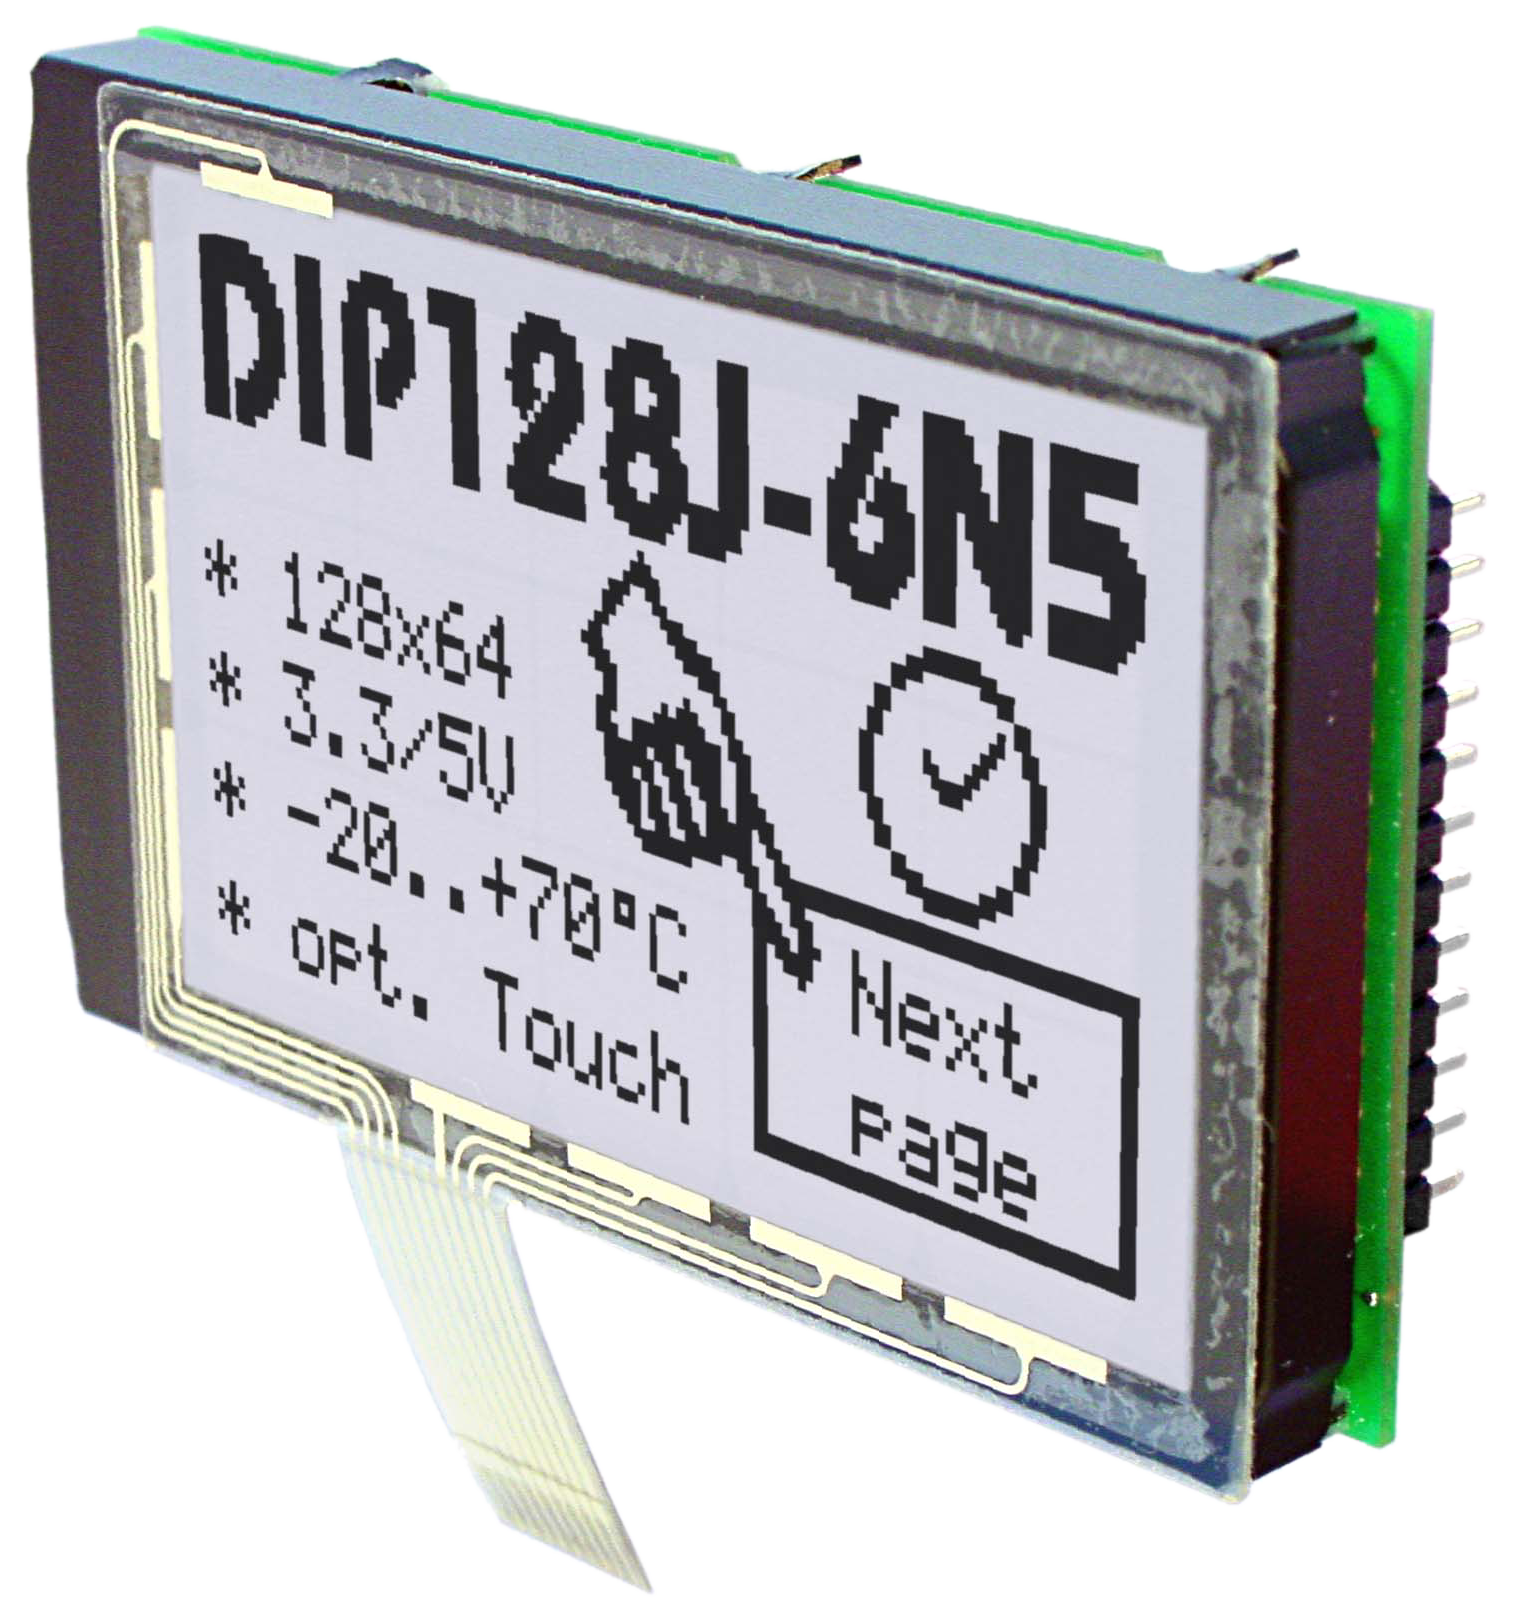 Displays in Chip on Board (COB) TEchnik, hier EA DIP128 als Grafikdisplay mit 128x64 Pixeln